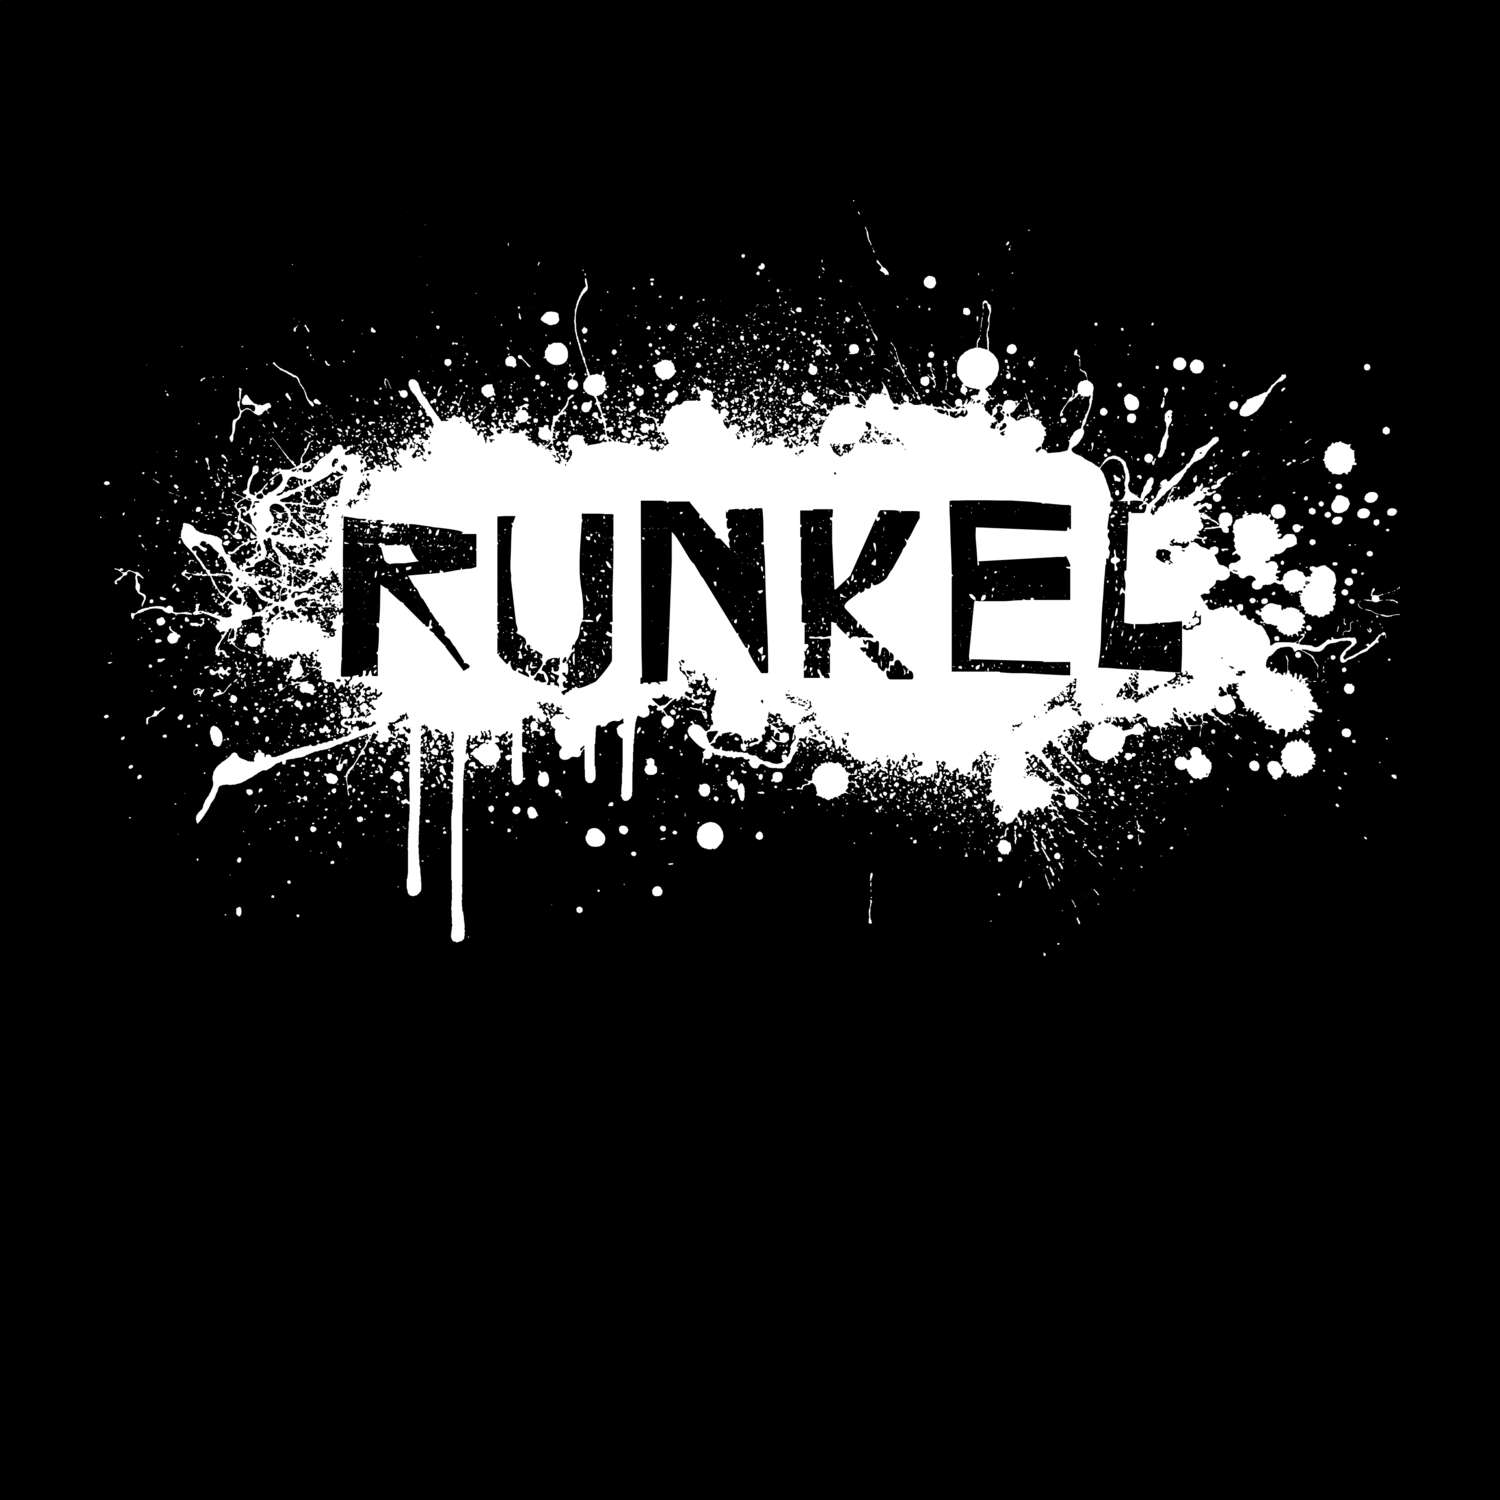 Runkel T-Shirt »Paint Splash Punk«